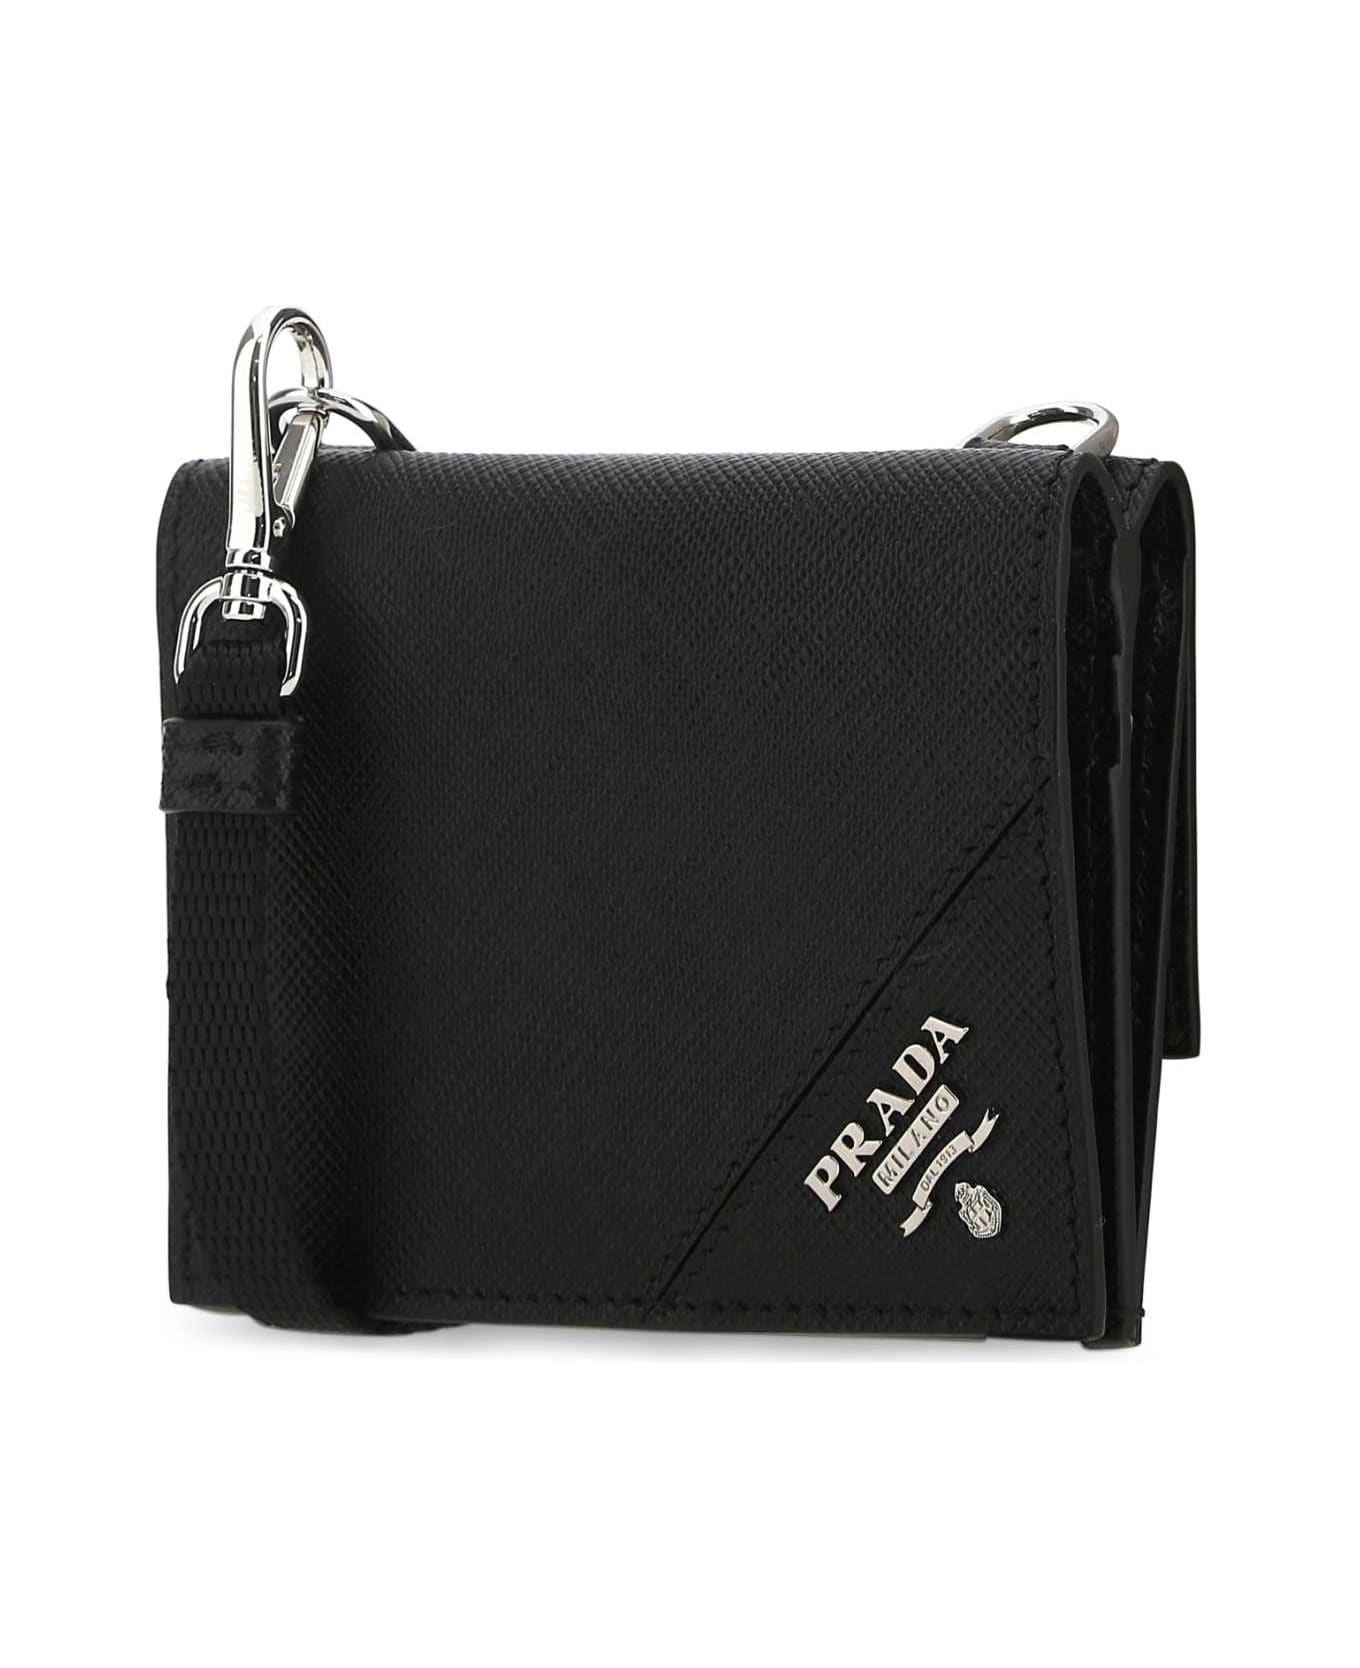 Prada Black Leather Cardholder - F0002 財布